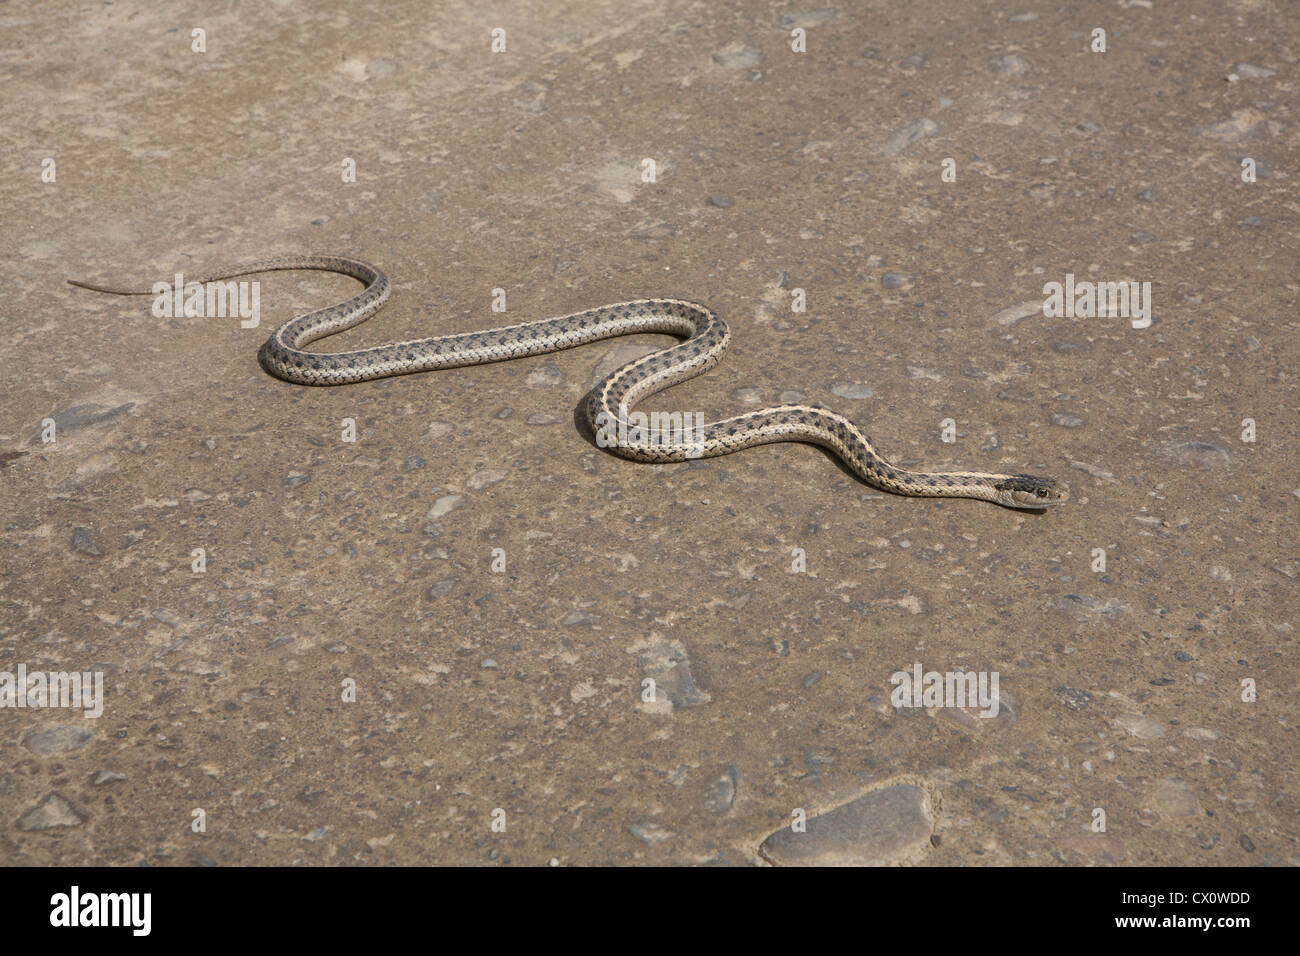 Common garter snake (Thamnophis sirtalis) attraversa road Foto Stock